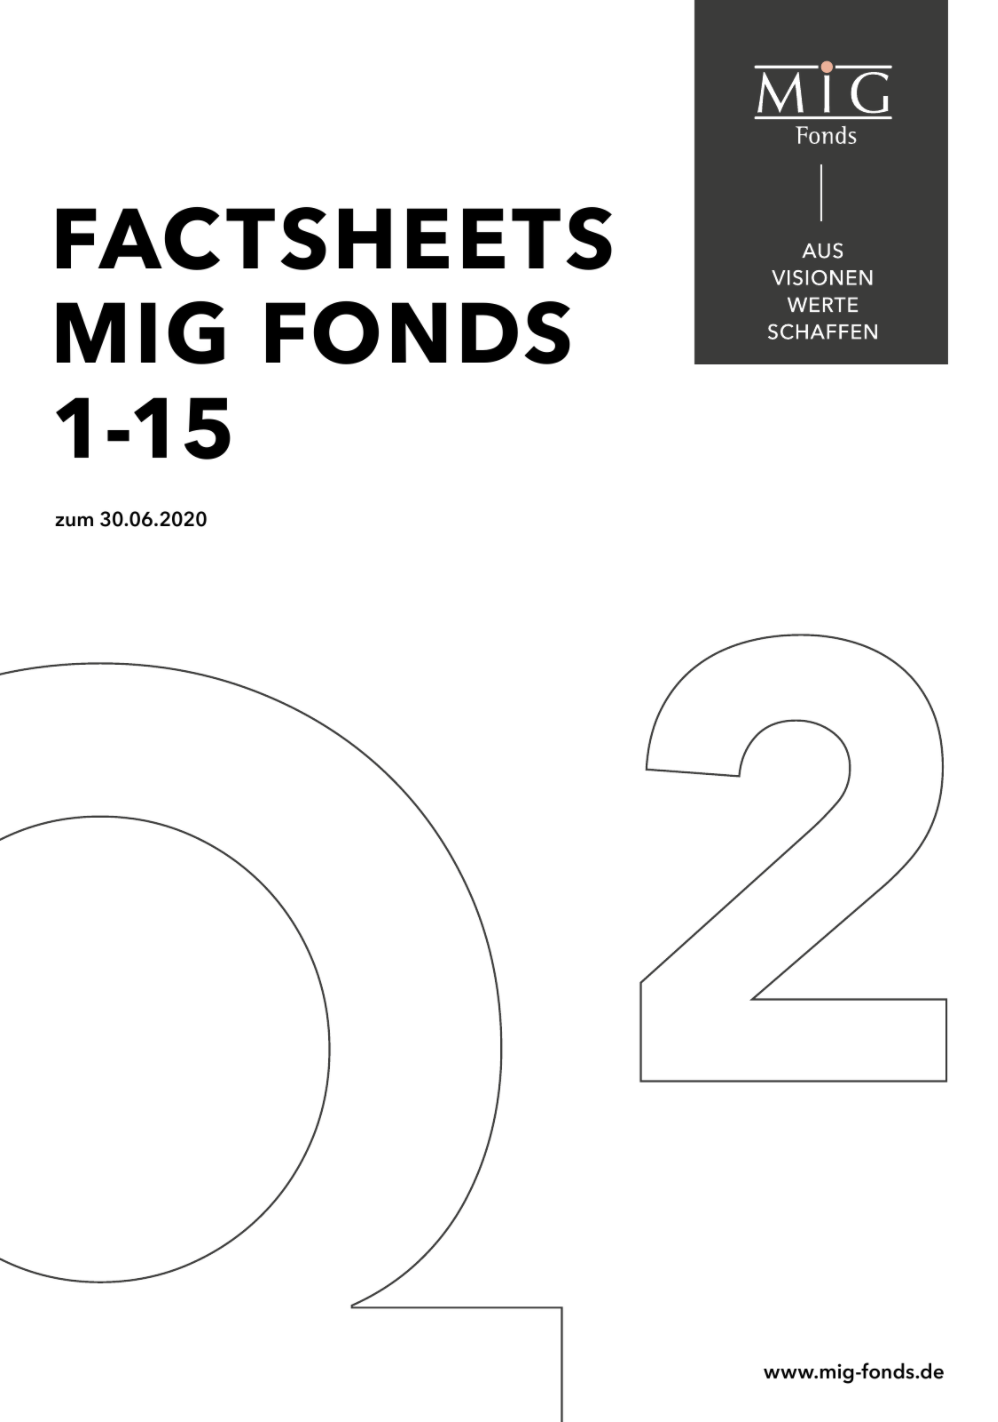 MIG Fonds 1 Factsheet